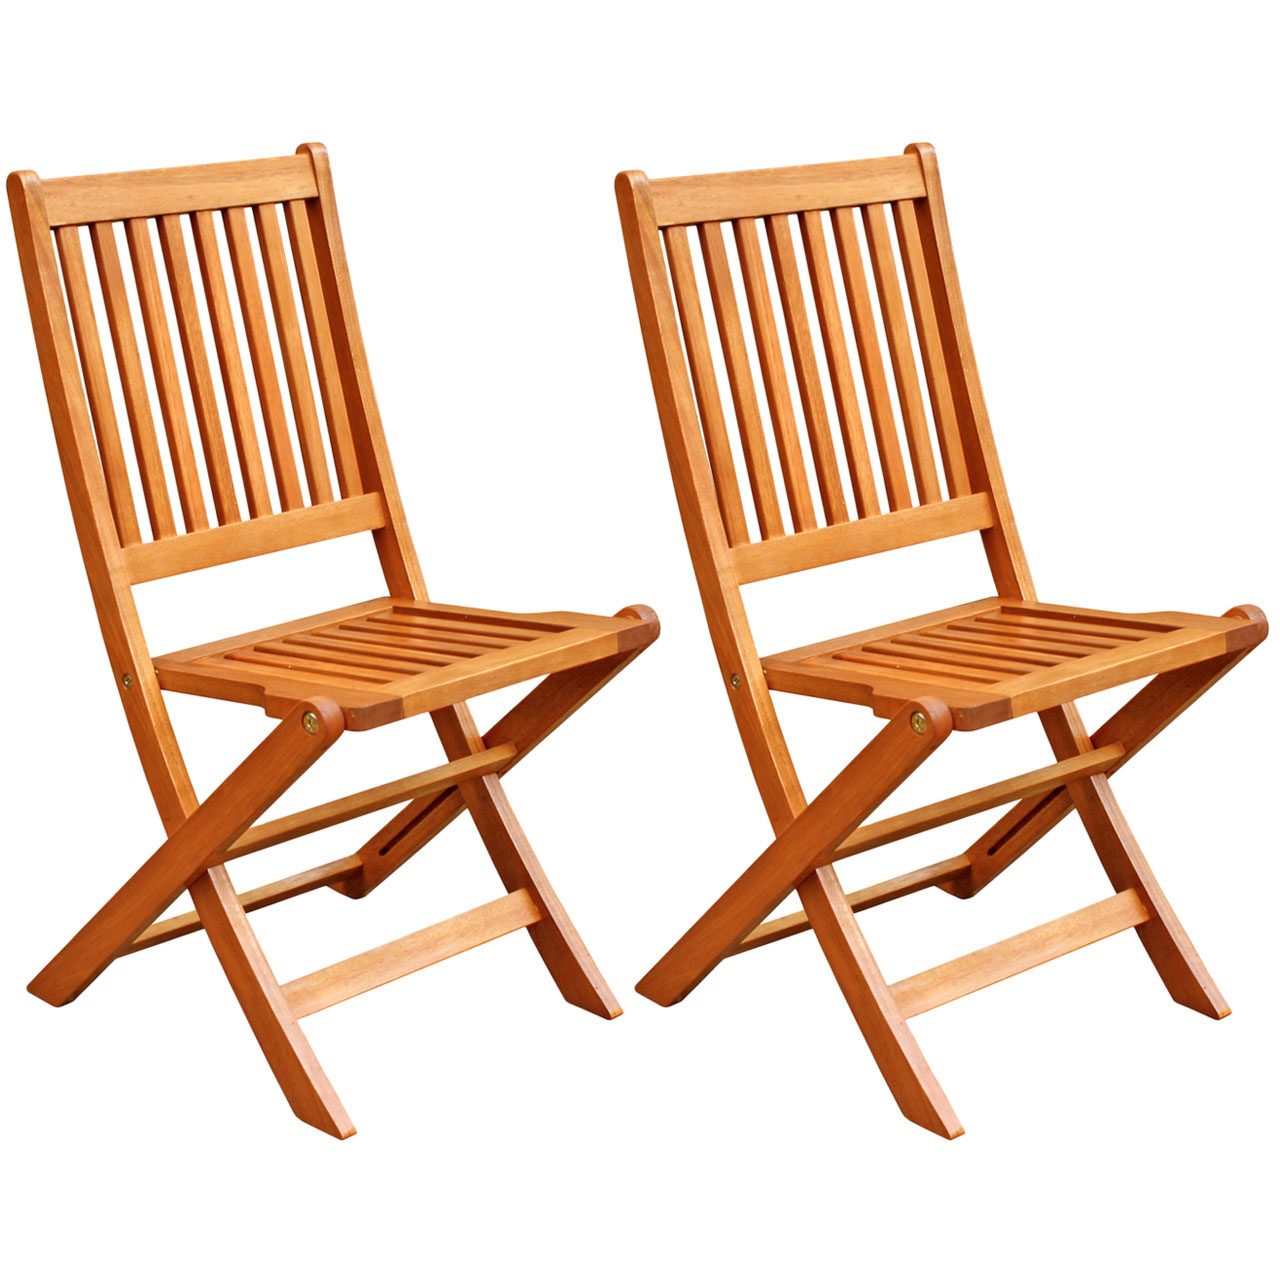 Hardwood folding chairs 1